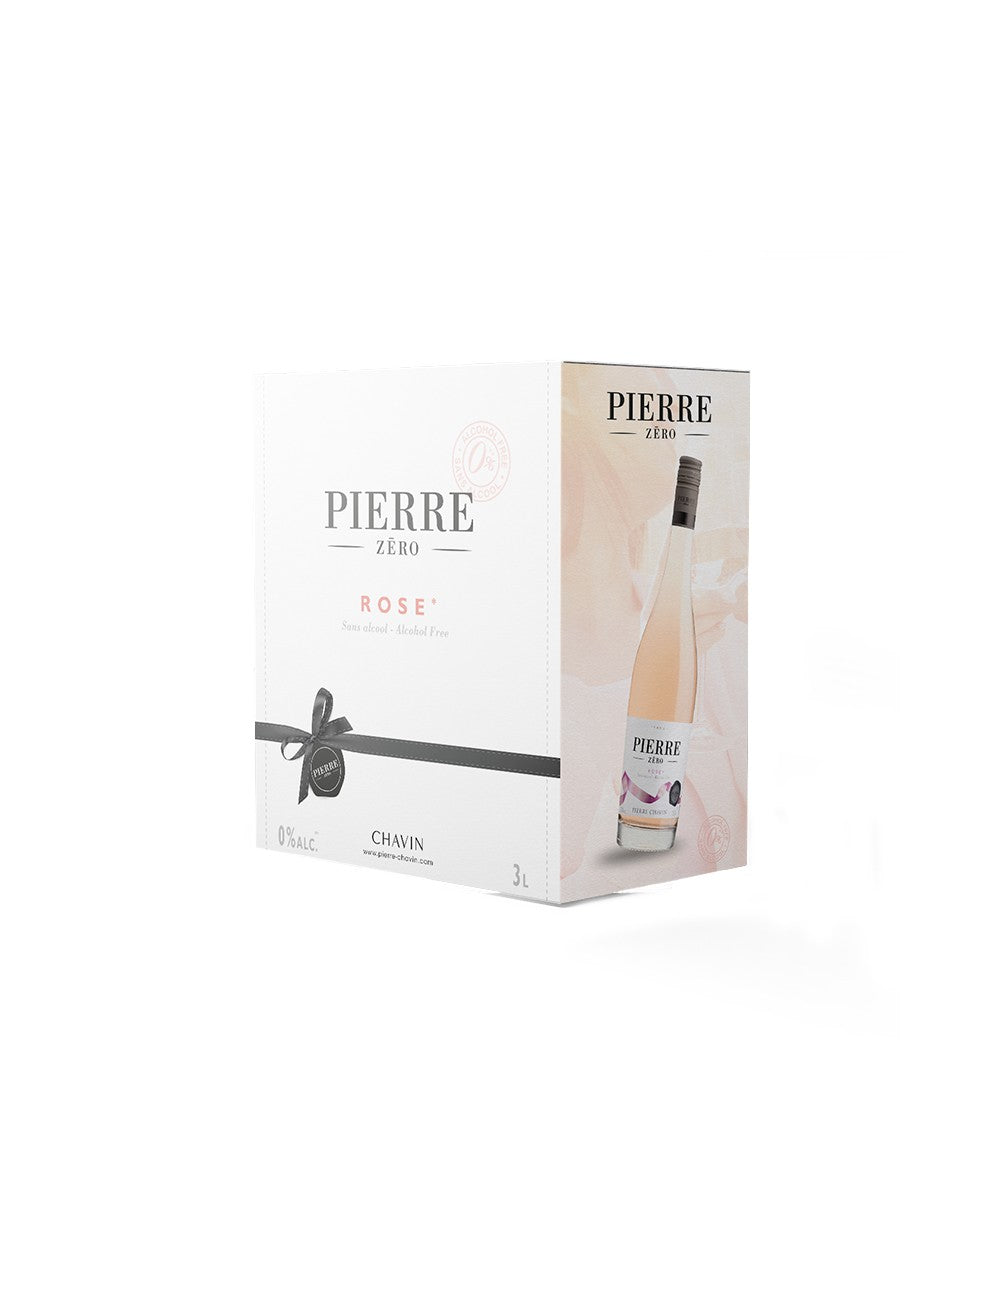 Pierre Zéro Alcohol Free Rosé Wine Box - Non-Alcoholic Boxed Rosé Wine